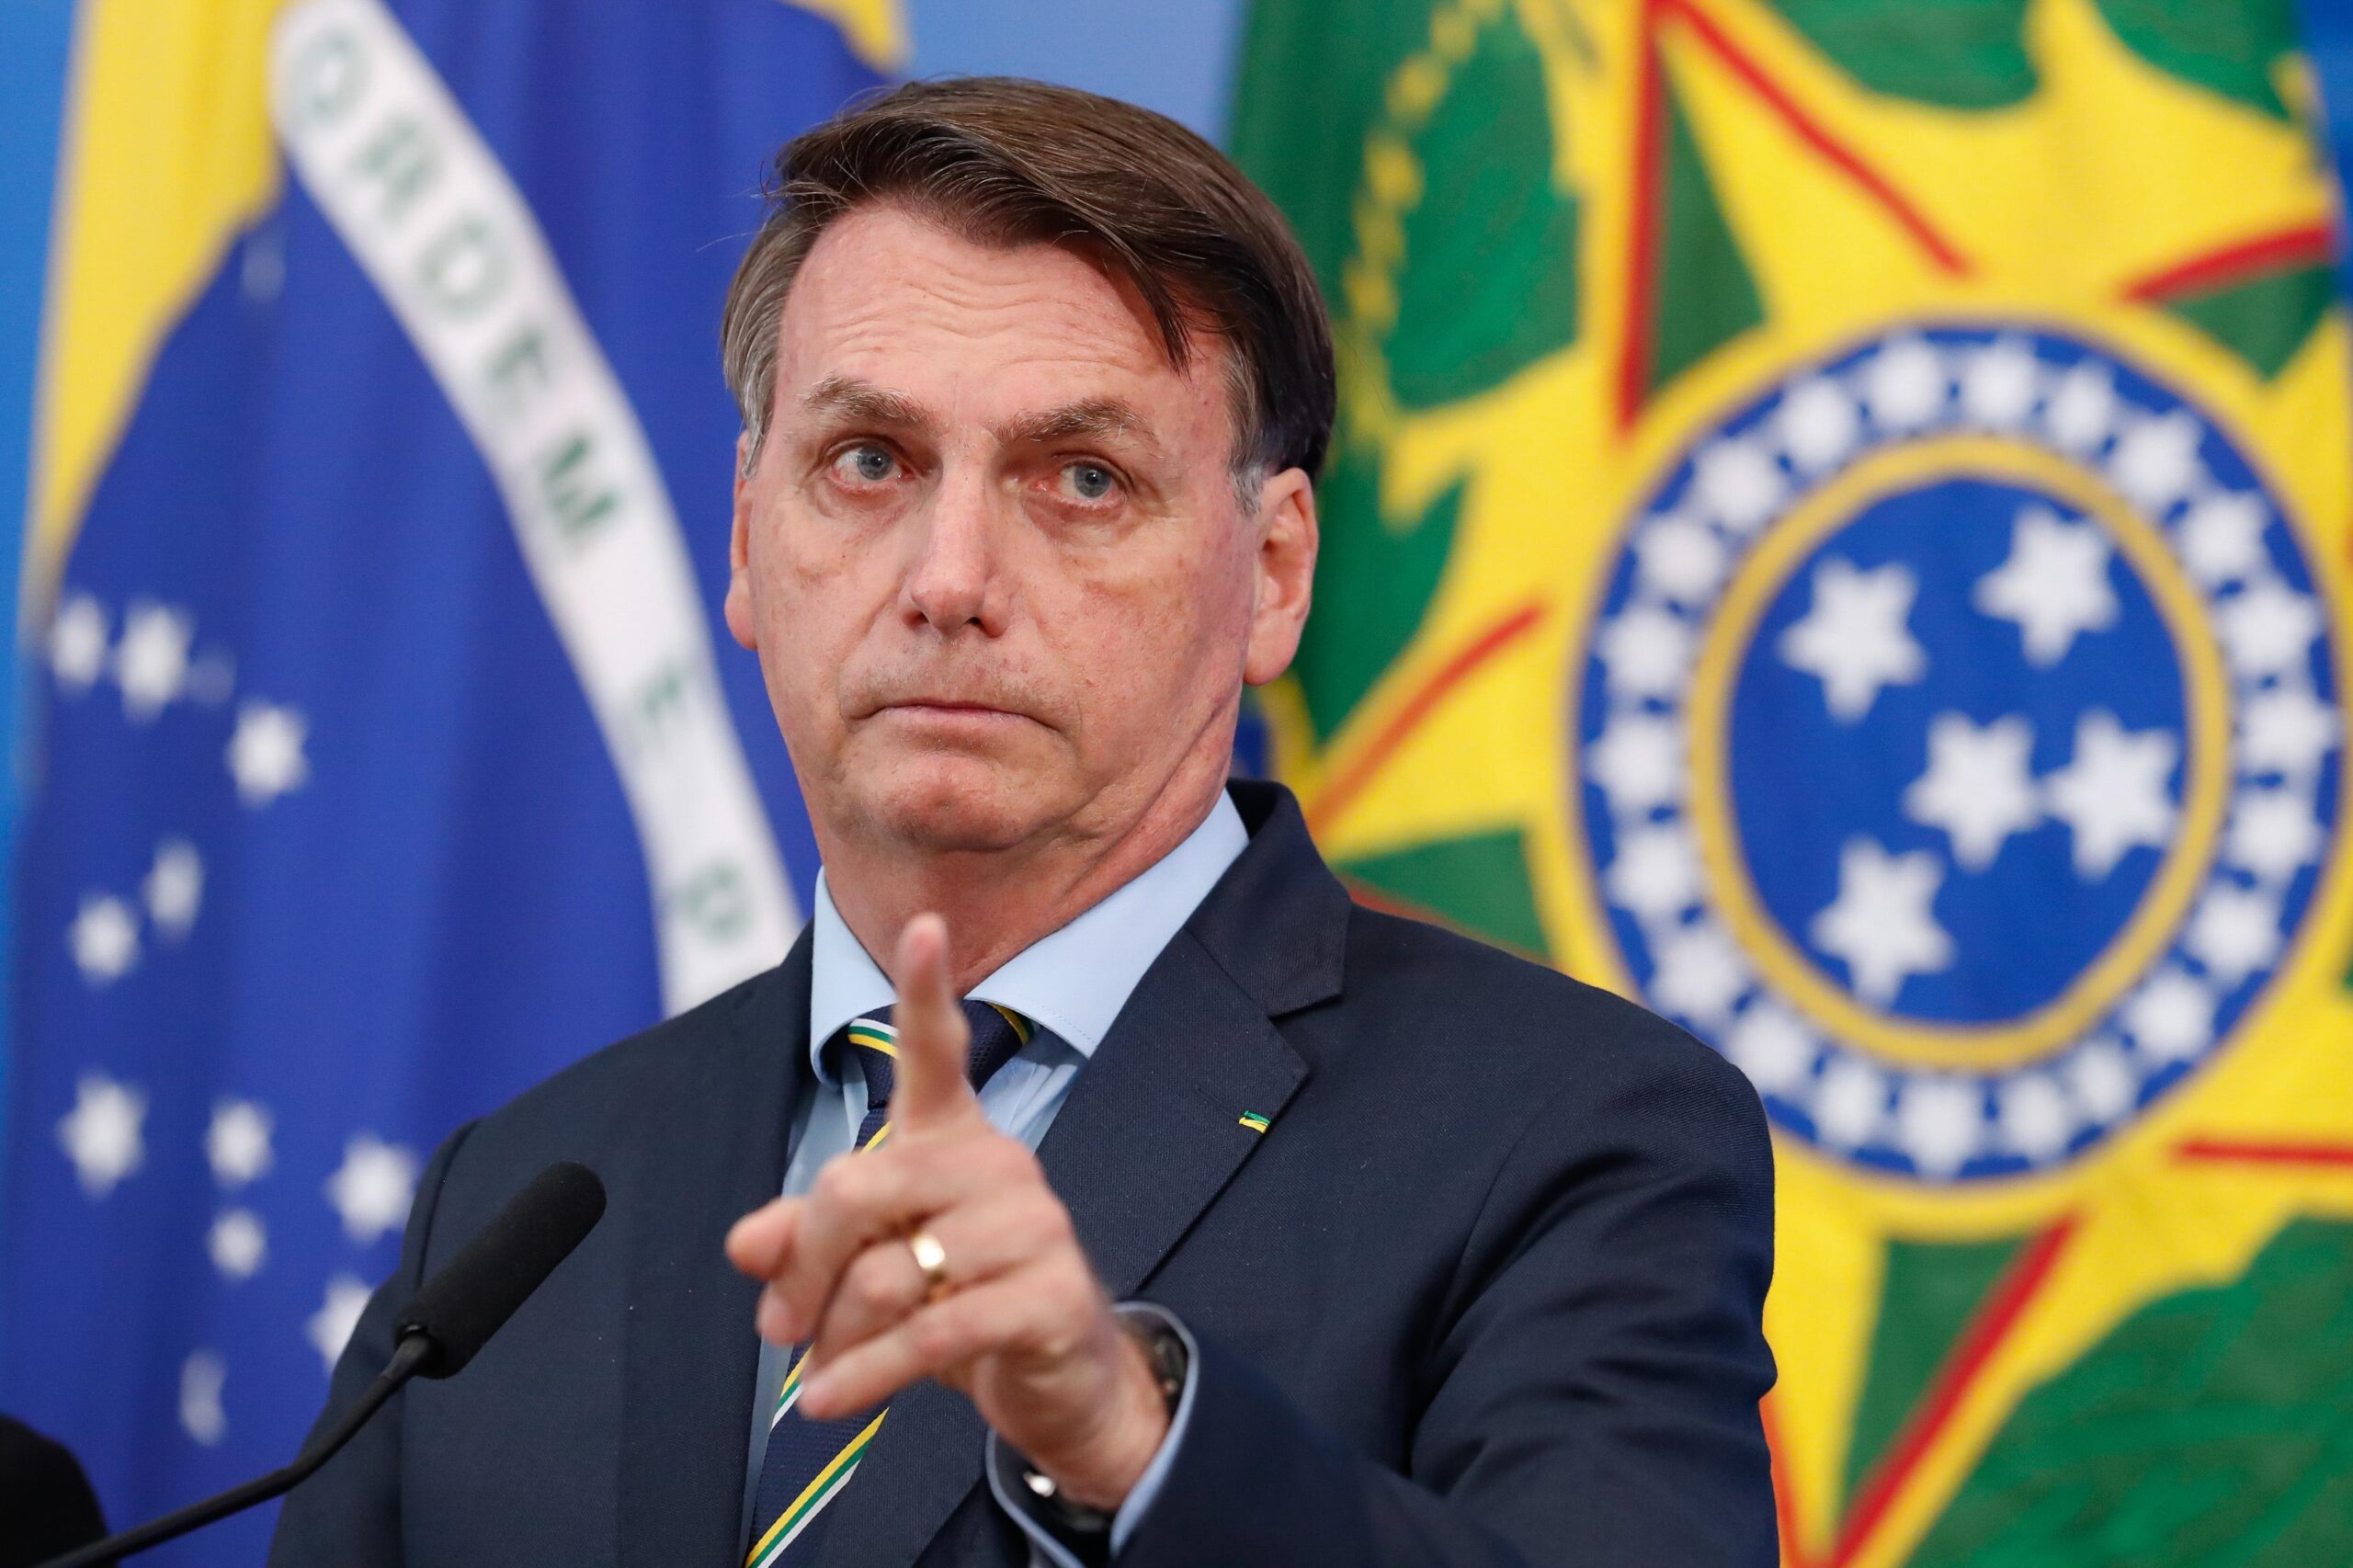 Bolsonaro anuncia distribución gratuita de vacuna Covid-19 a todo Brasil